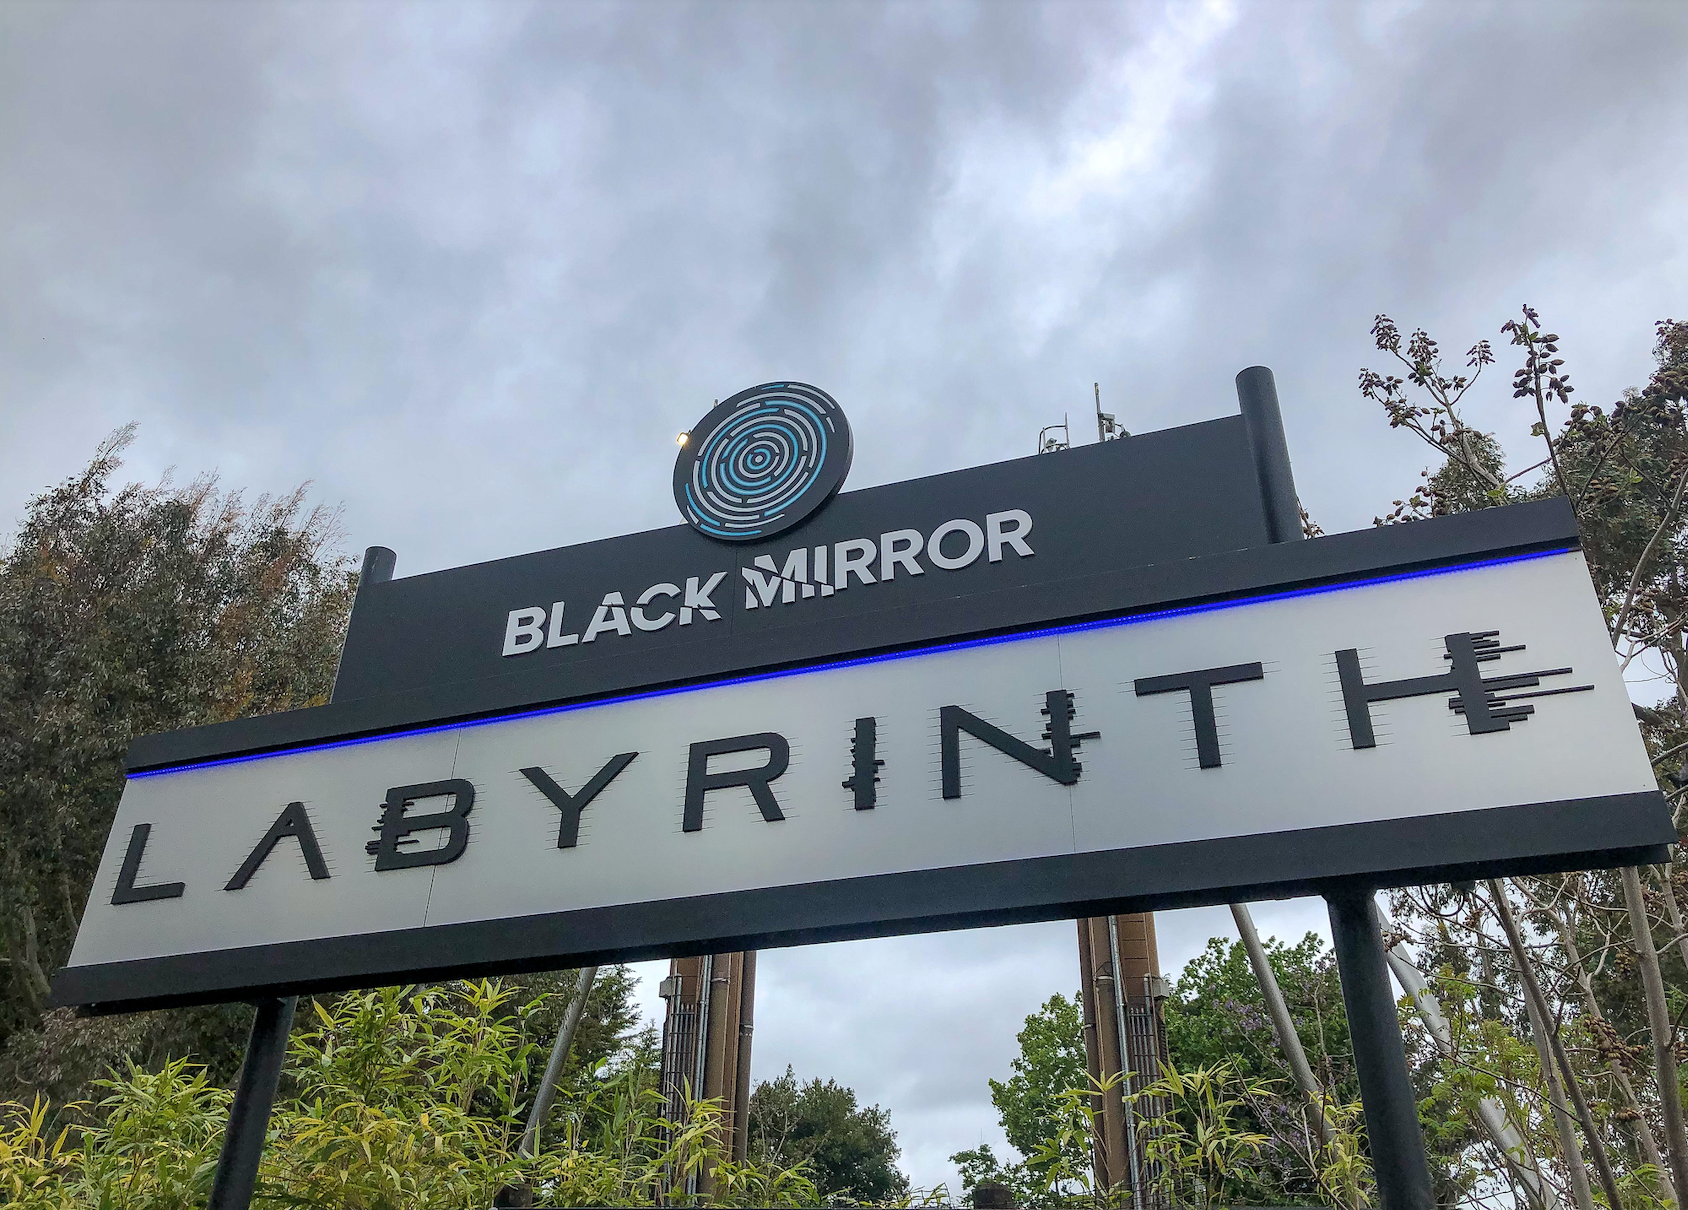 Black Mirror Labyrinth at Thorpe Park